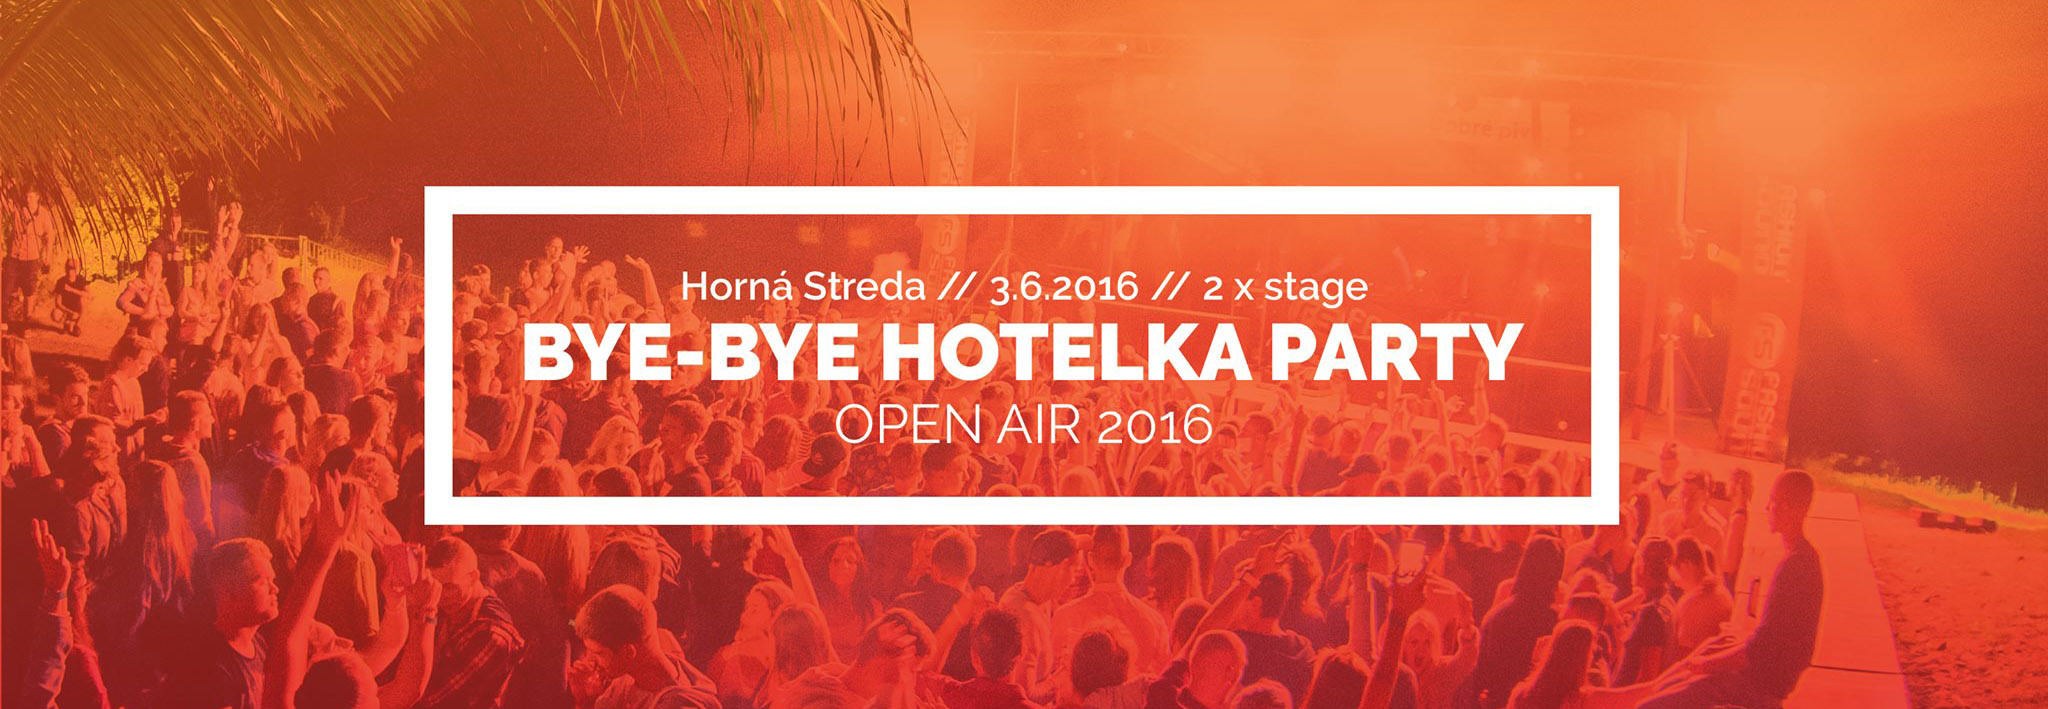 BYE-BYE HOTELKA PARTY Open Air 2016